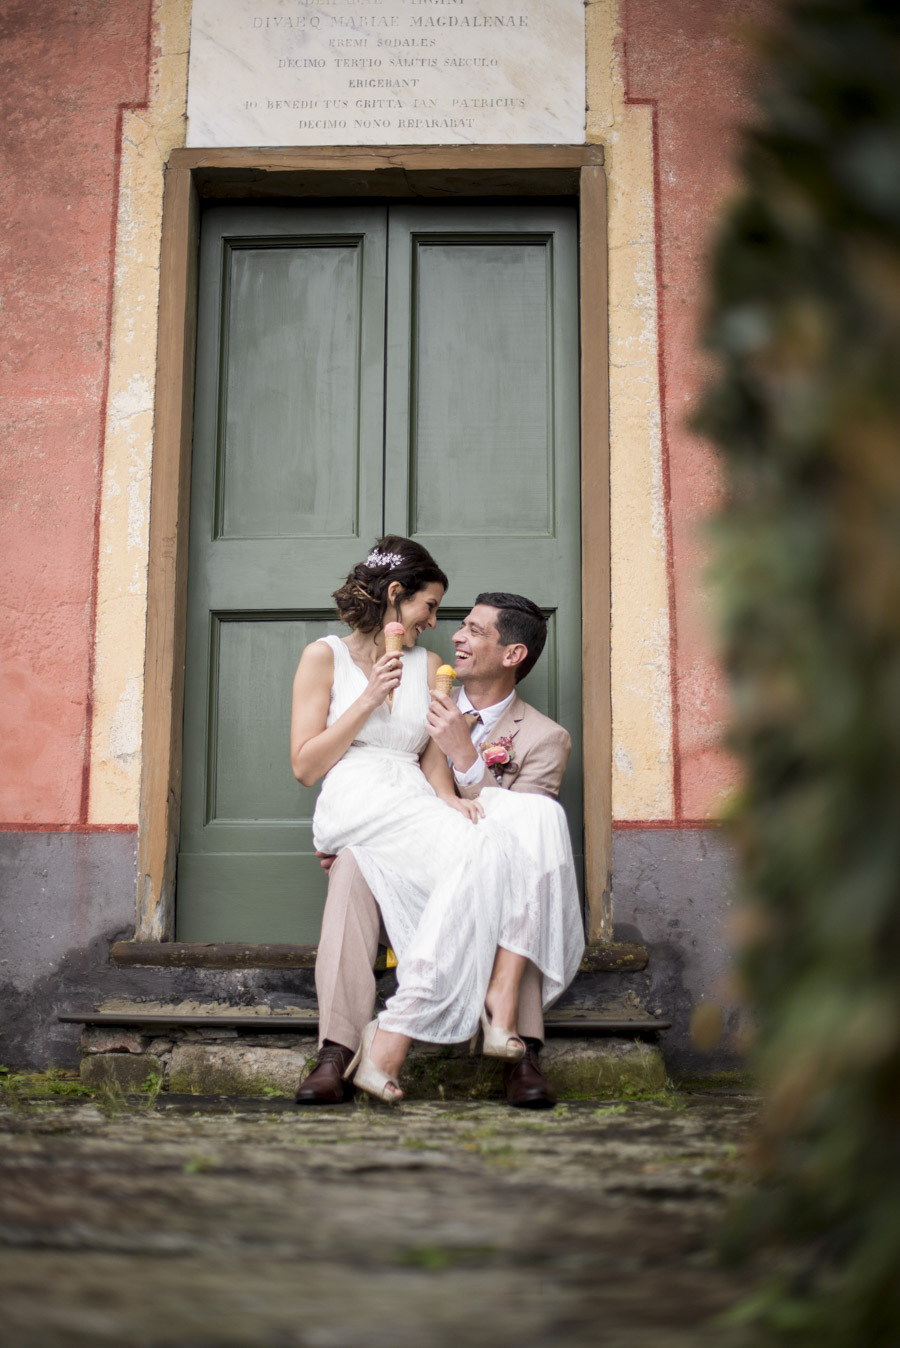 liguria-italy-summer-bride-groom